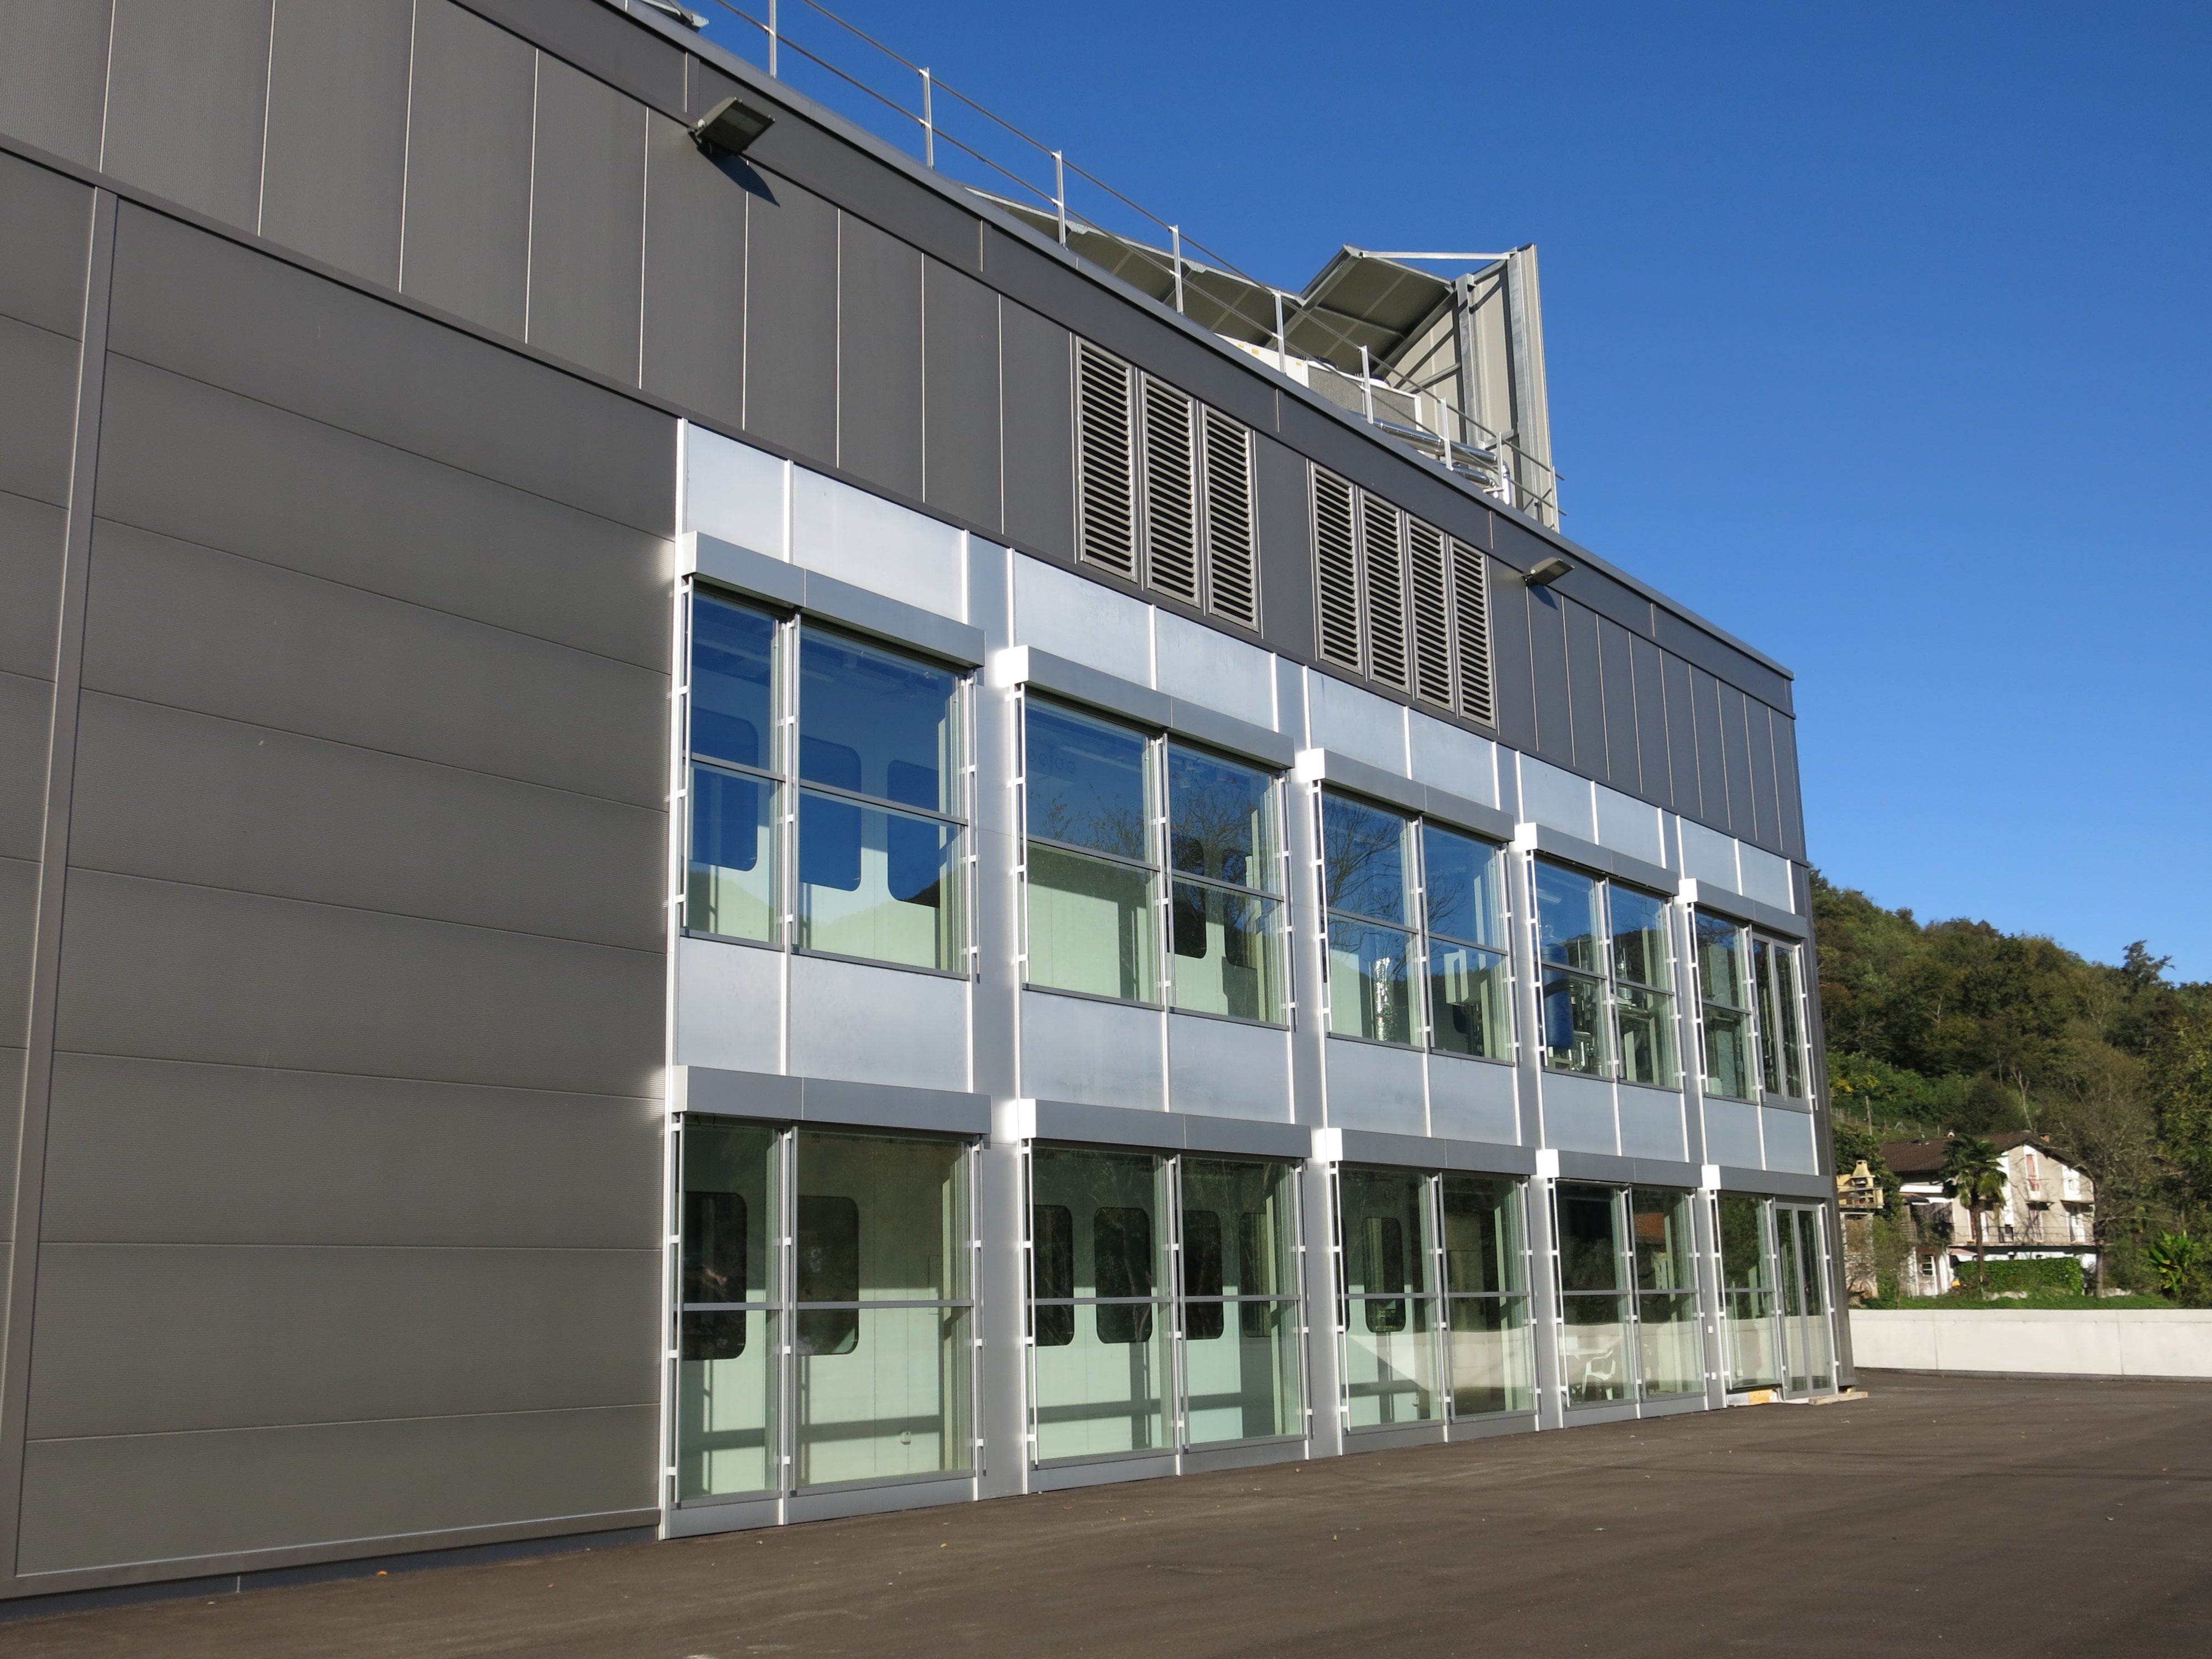 Perris Swiss Laboratory